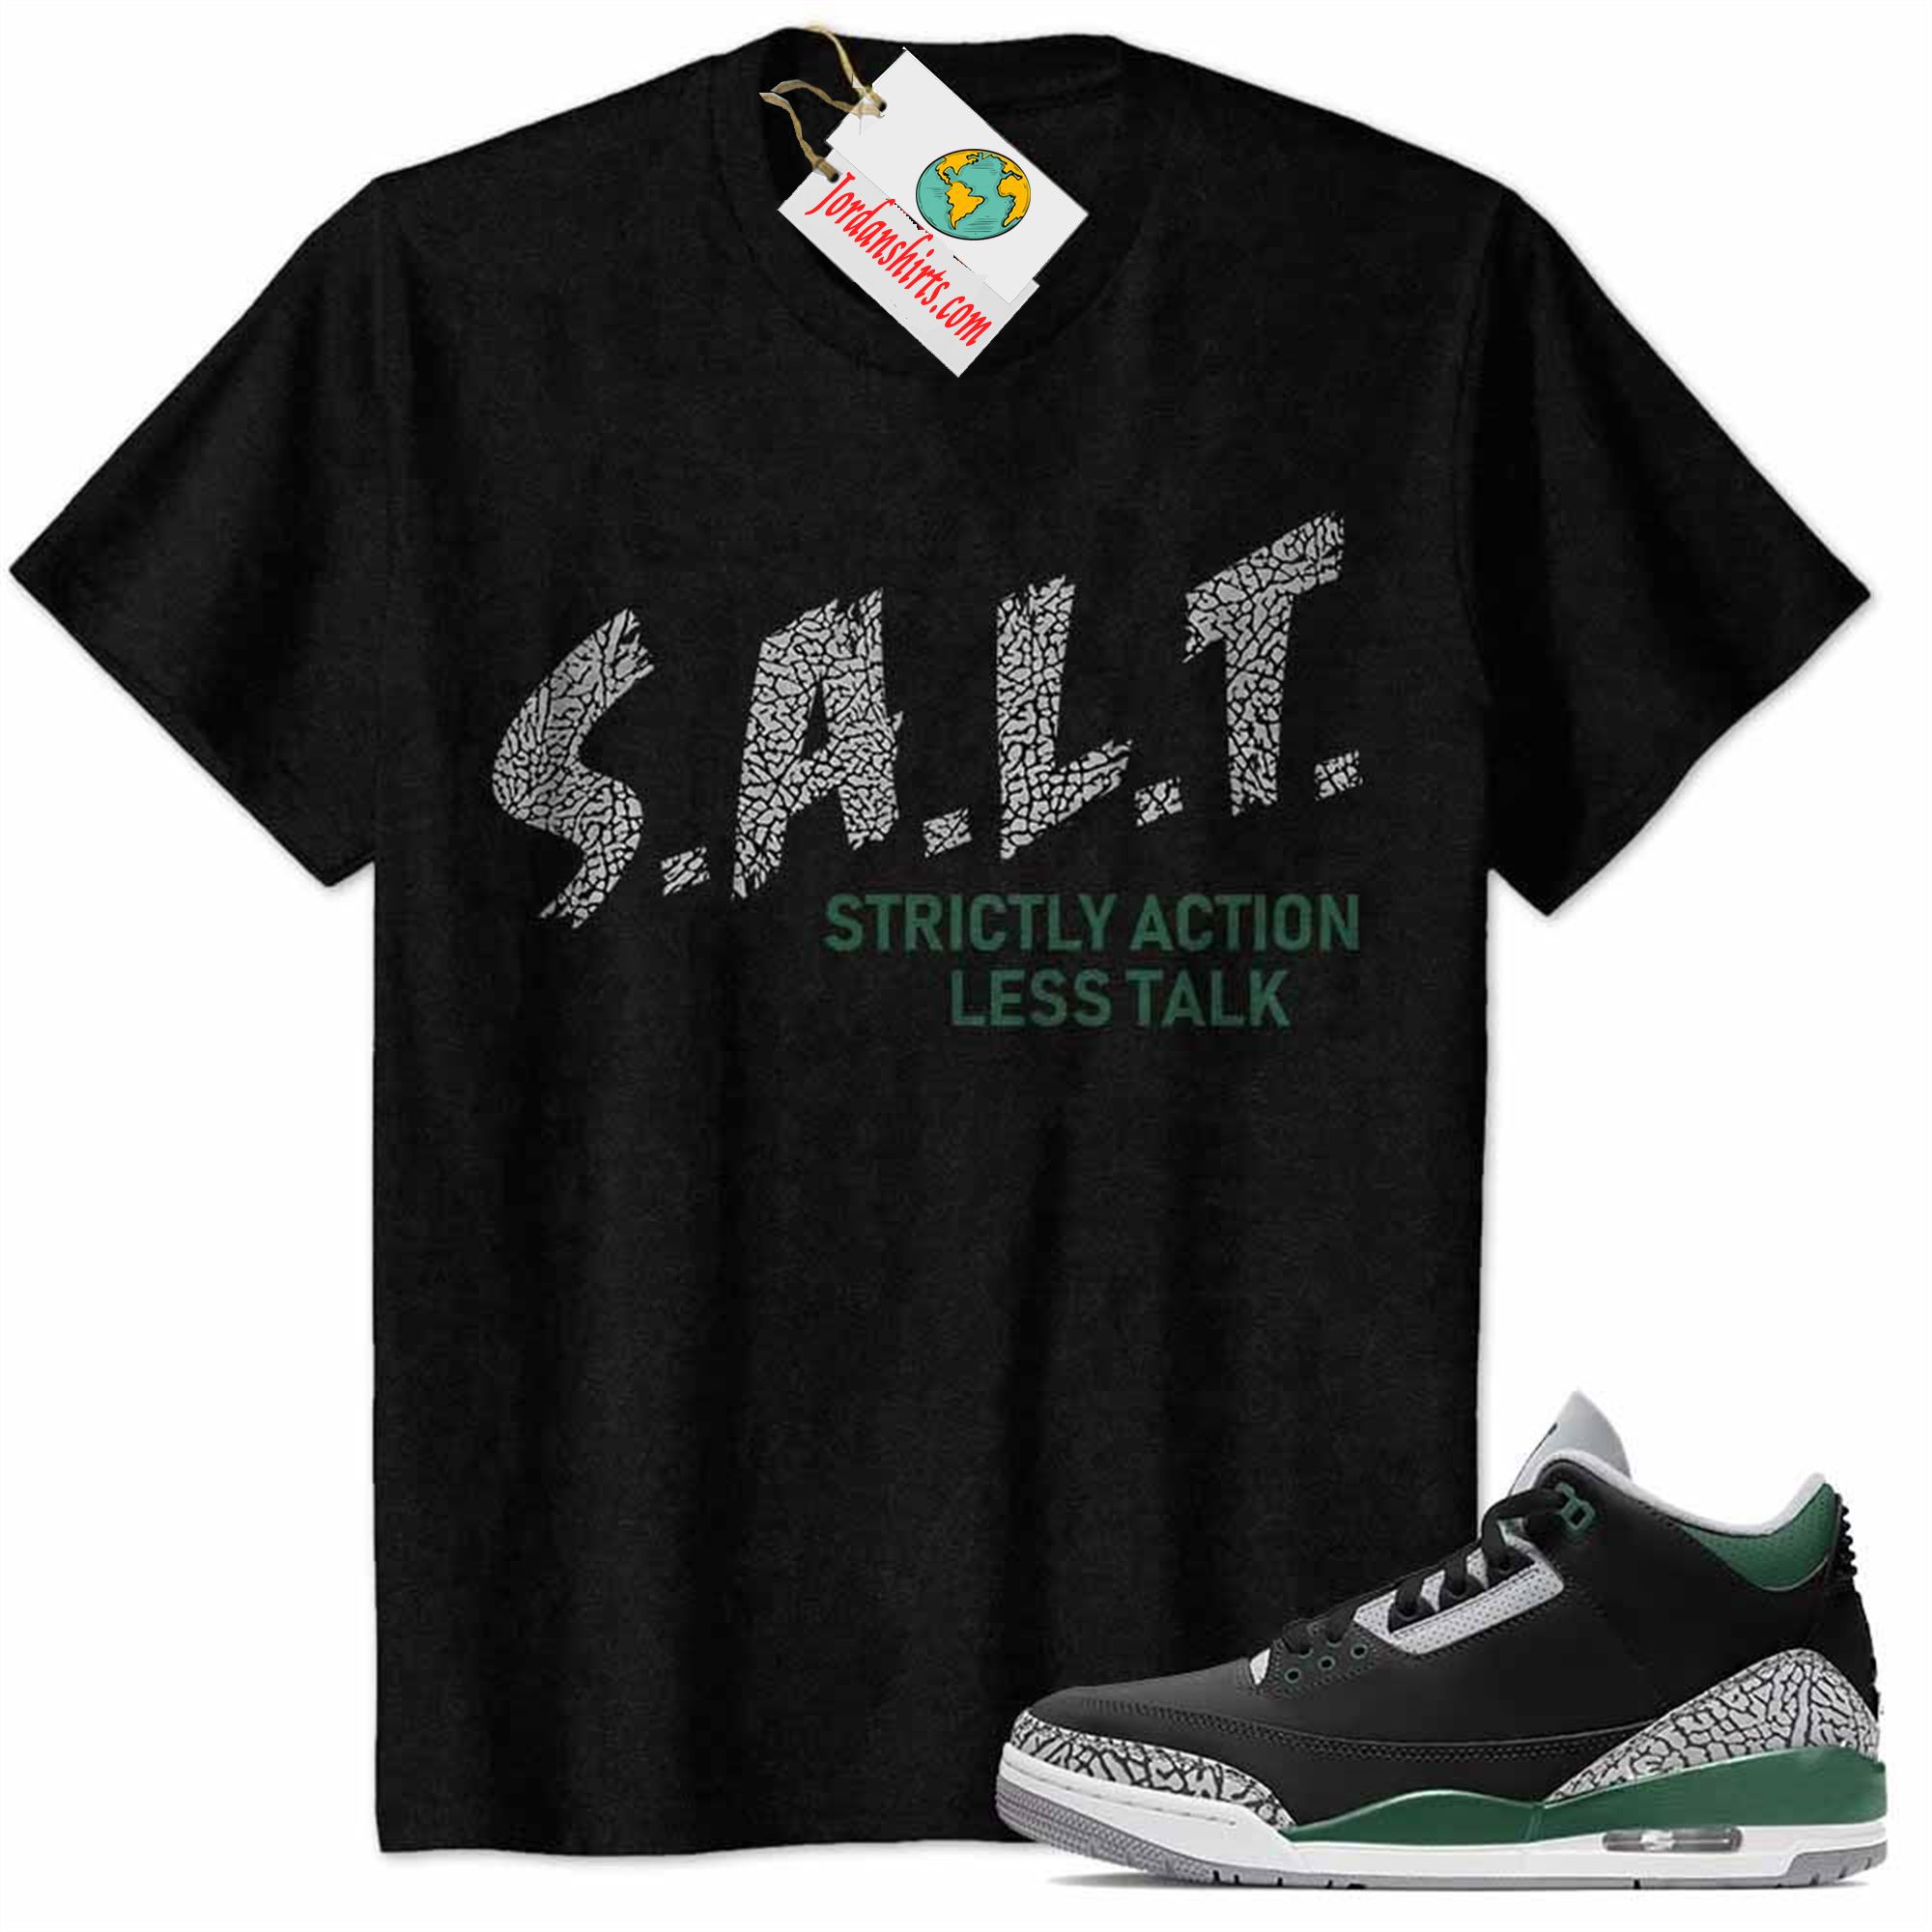 Jordan 3 Shirt, Salt Salt Strictly Action Less Talk Black Air Jordan 3 Pine Green 3s Full Size Up To 5xl